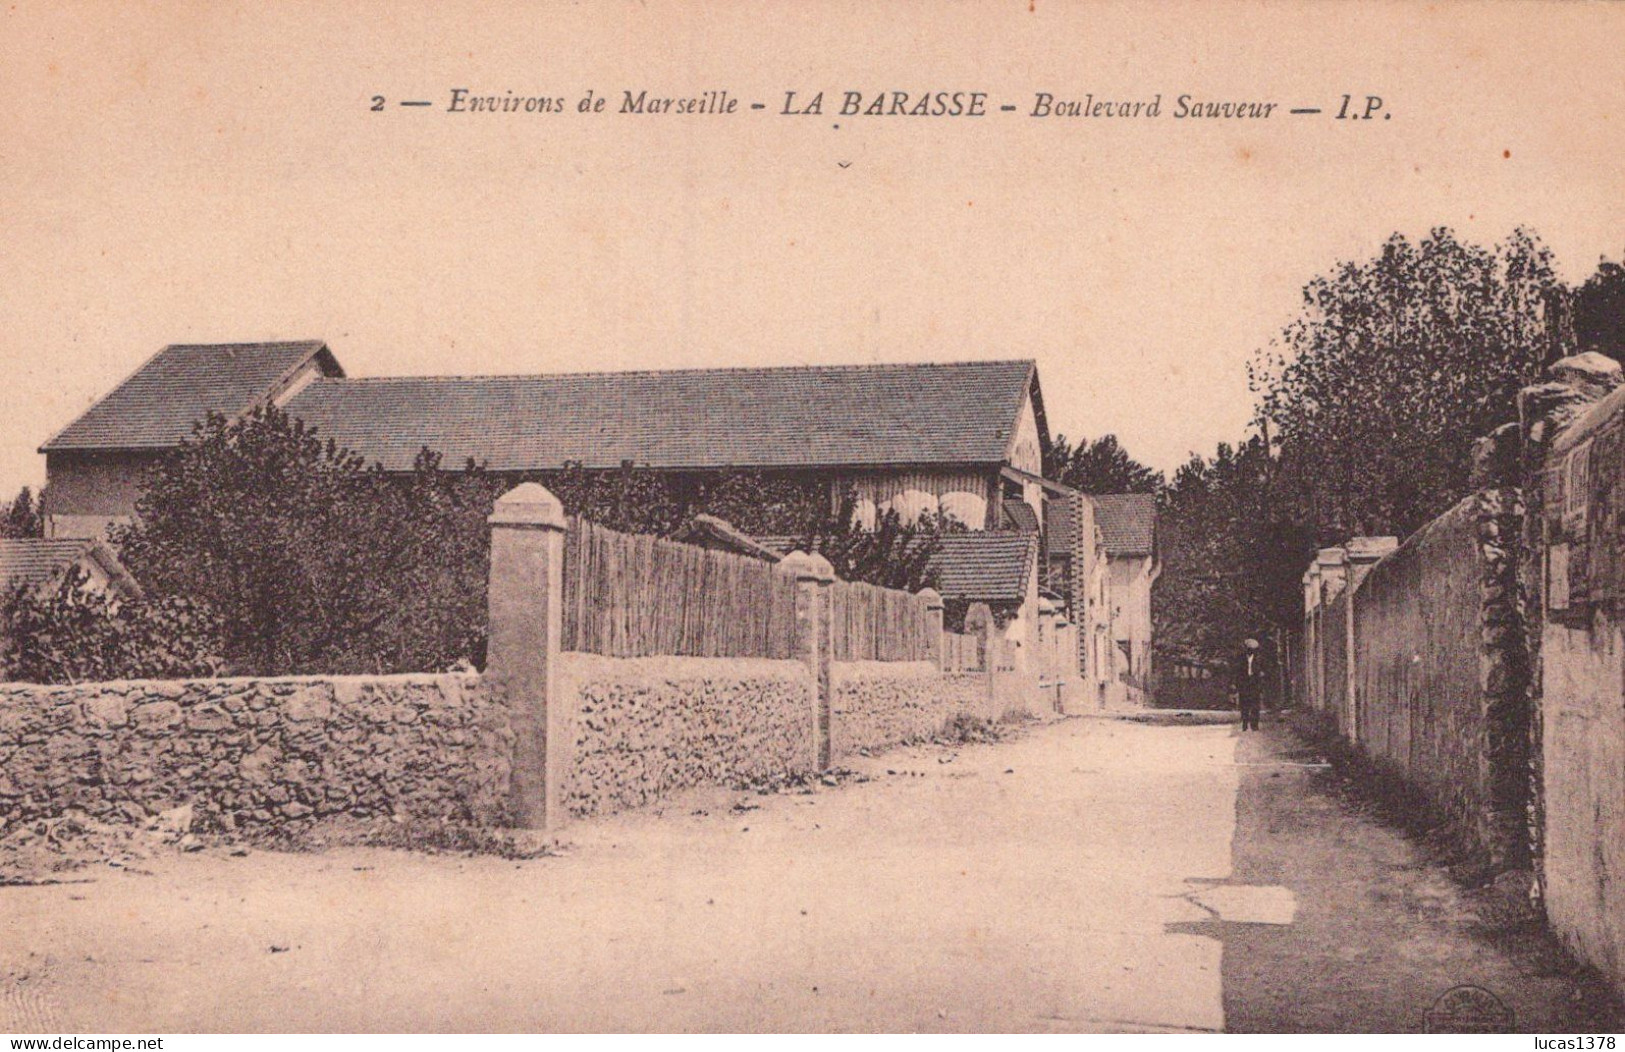 13 / MARSEILLE / LA BARASSE / BOULEVARD SAUVEUR / IP 2 - Saint Marcel, La Barasse, Saintt Menet